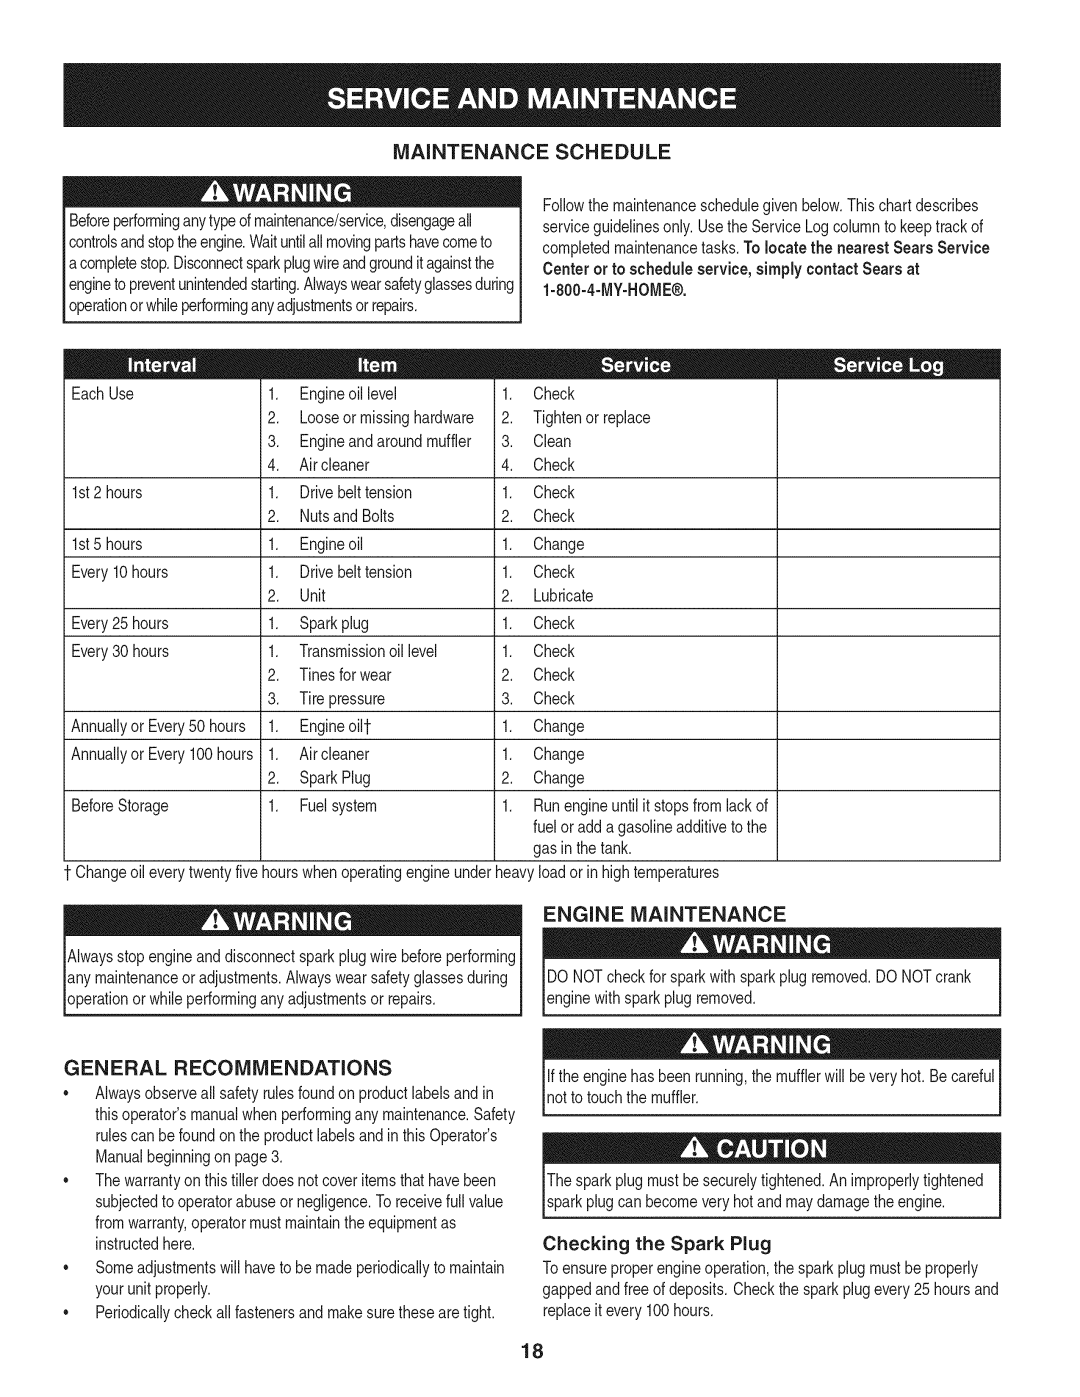 Craftsman 247.29931 manual Maintenance Schedule, General Recommendations, Engine Maintenance 